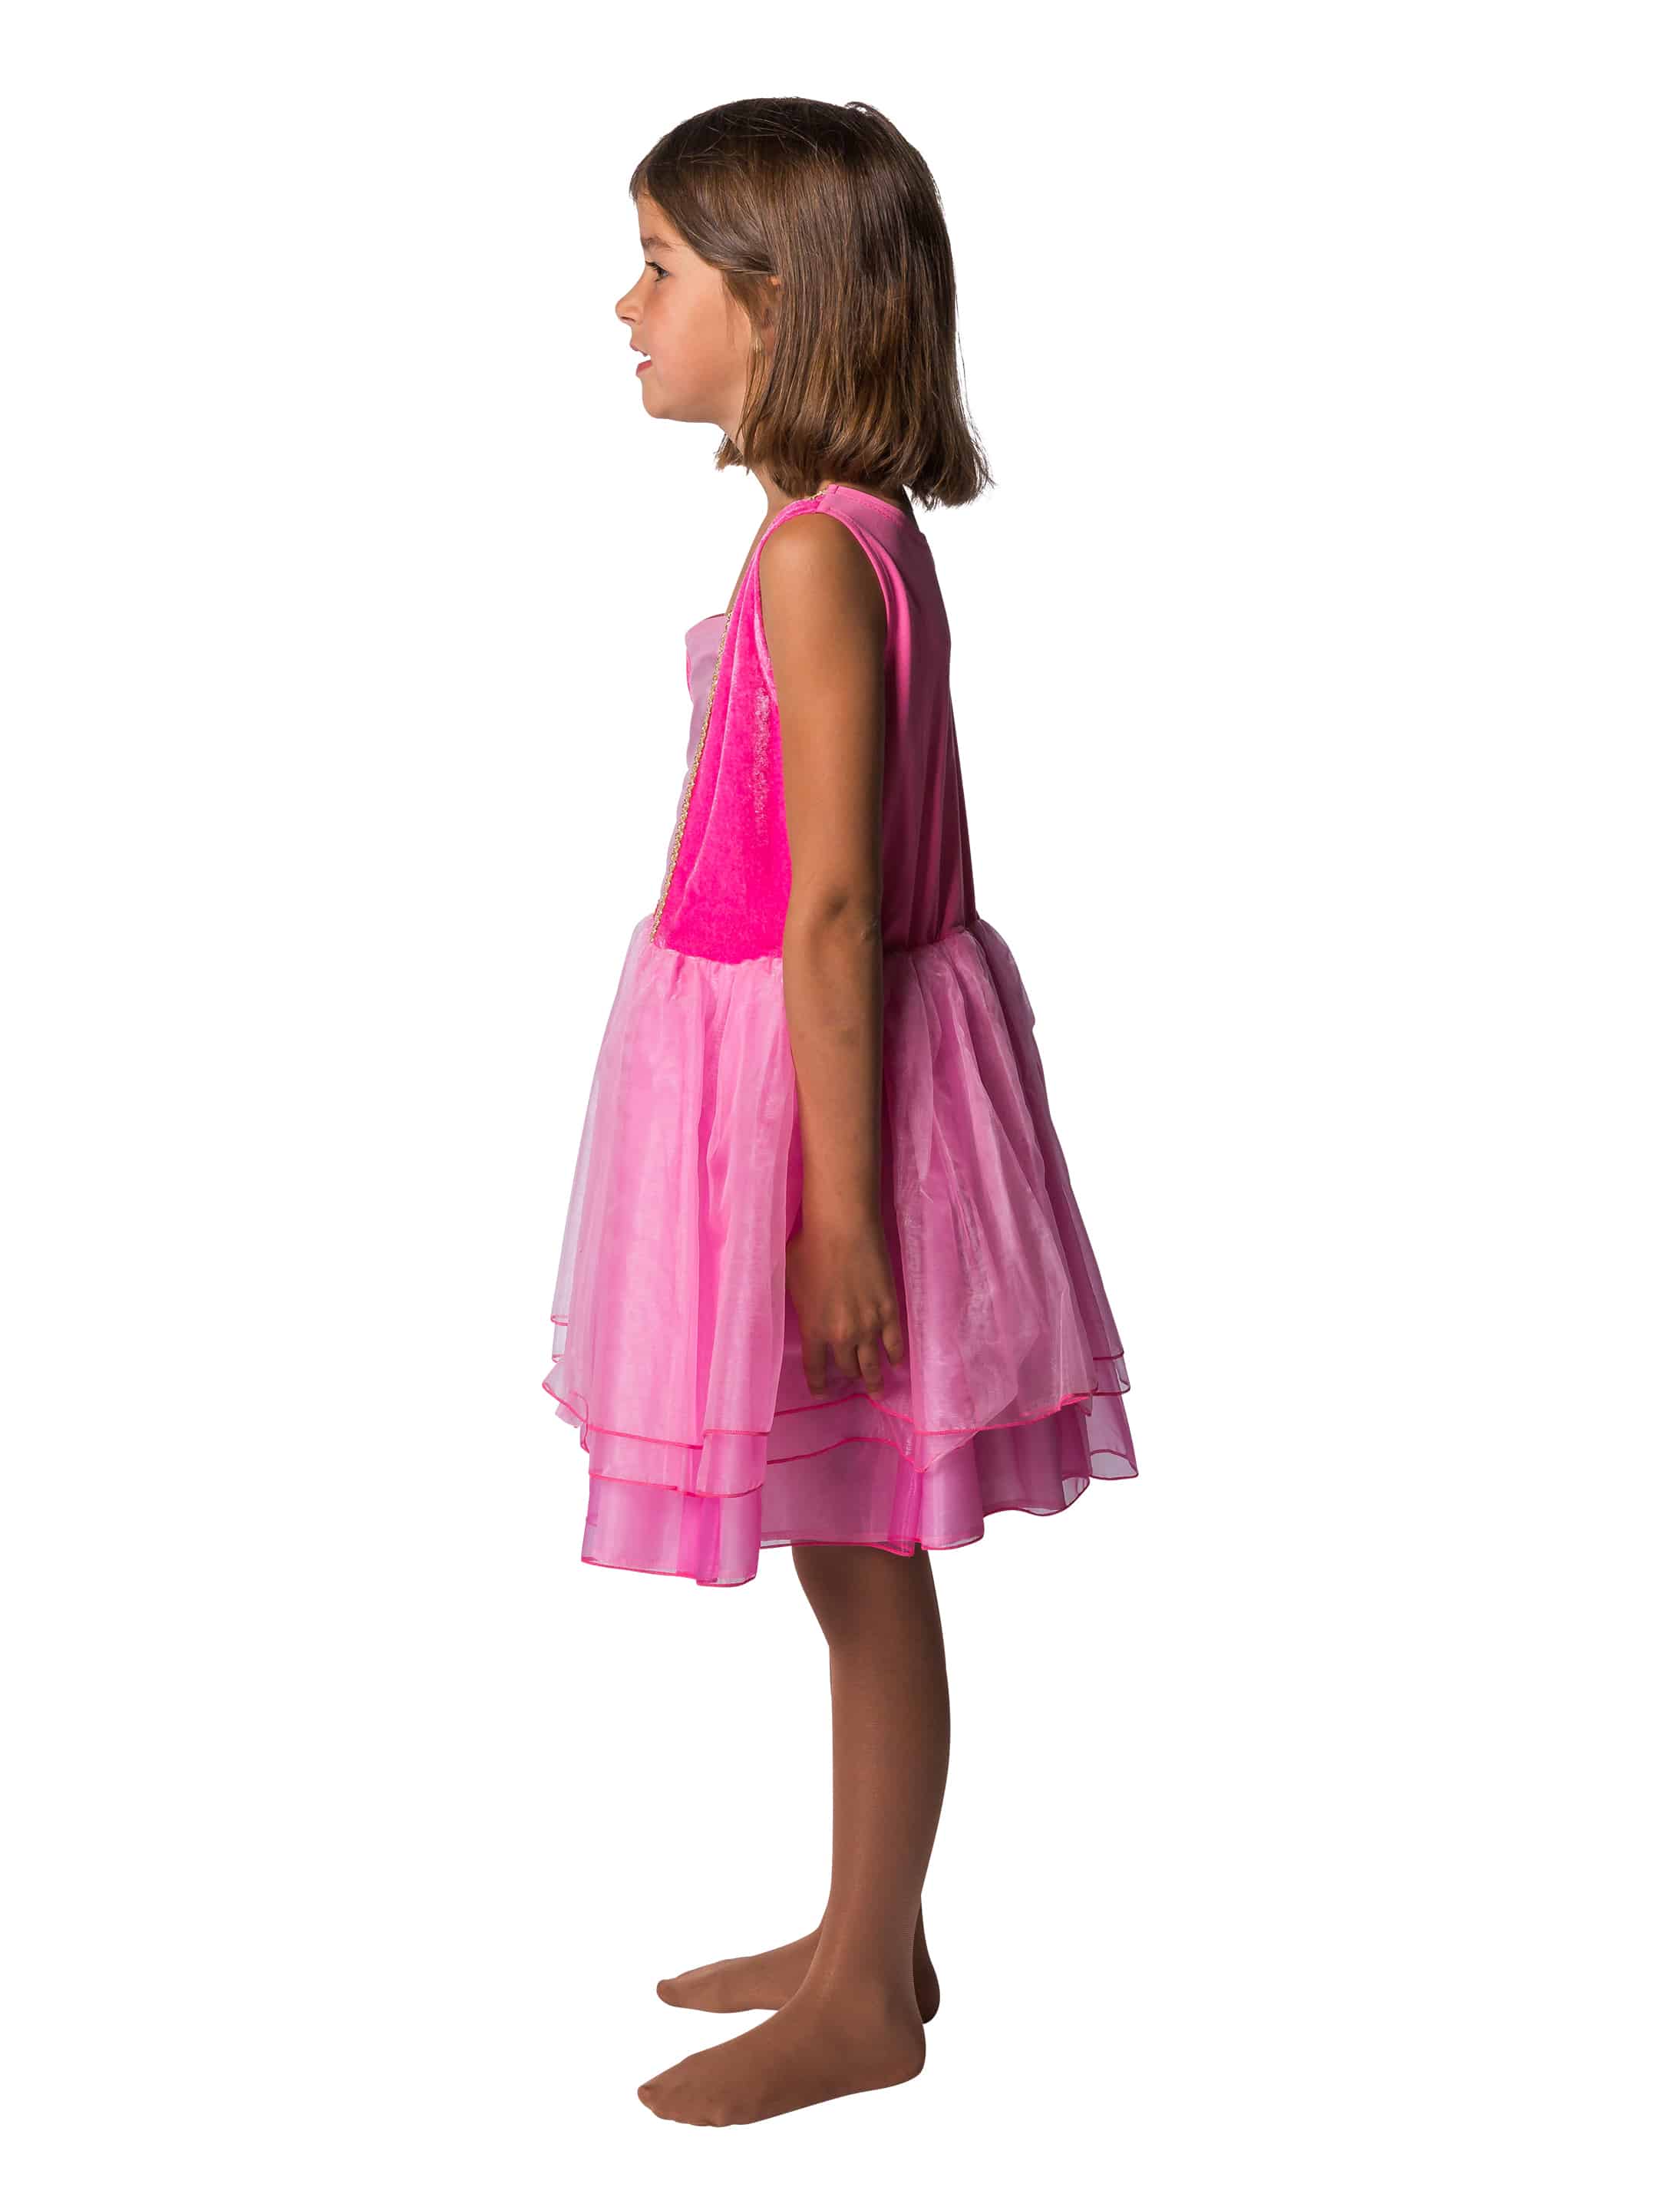 Kleid Flamingo Kinder pink 5-6 Jahre